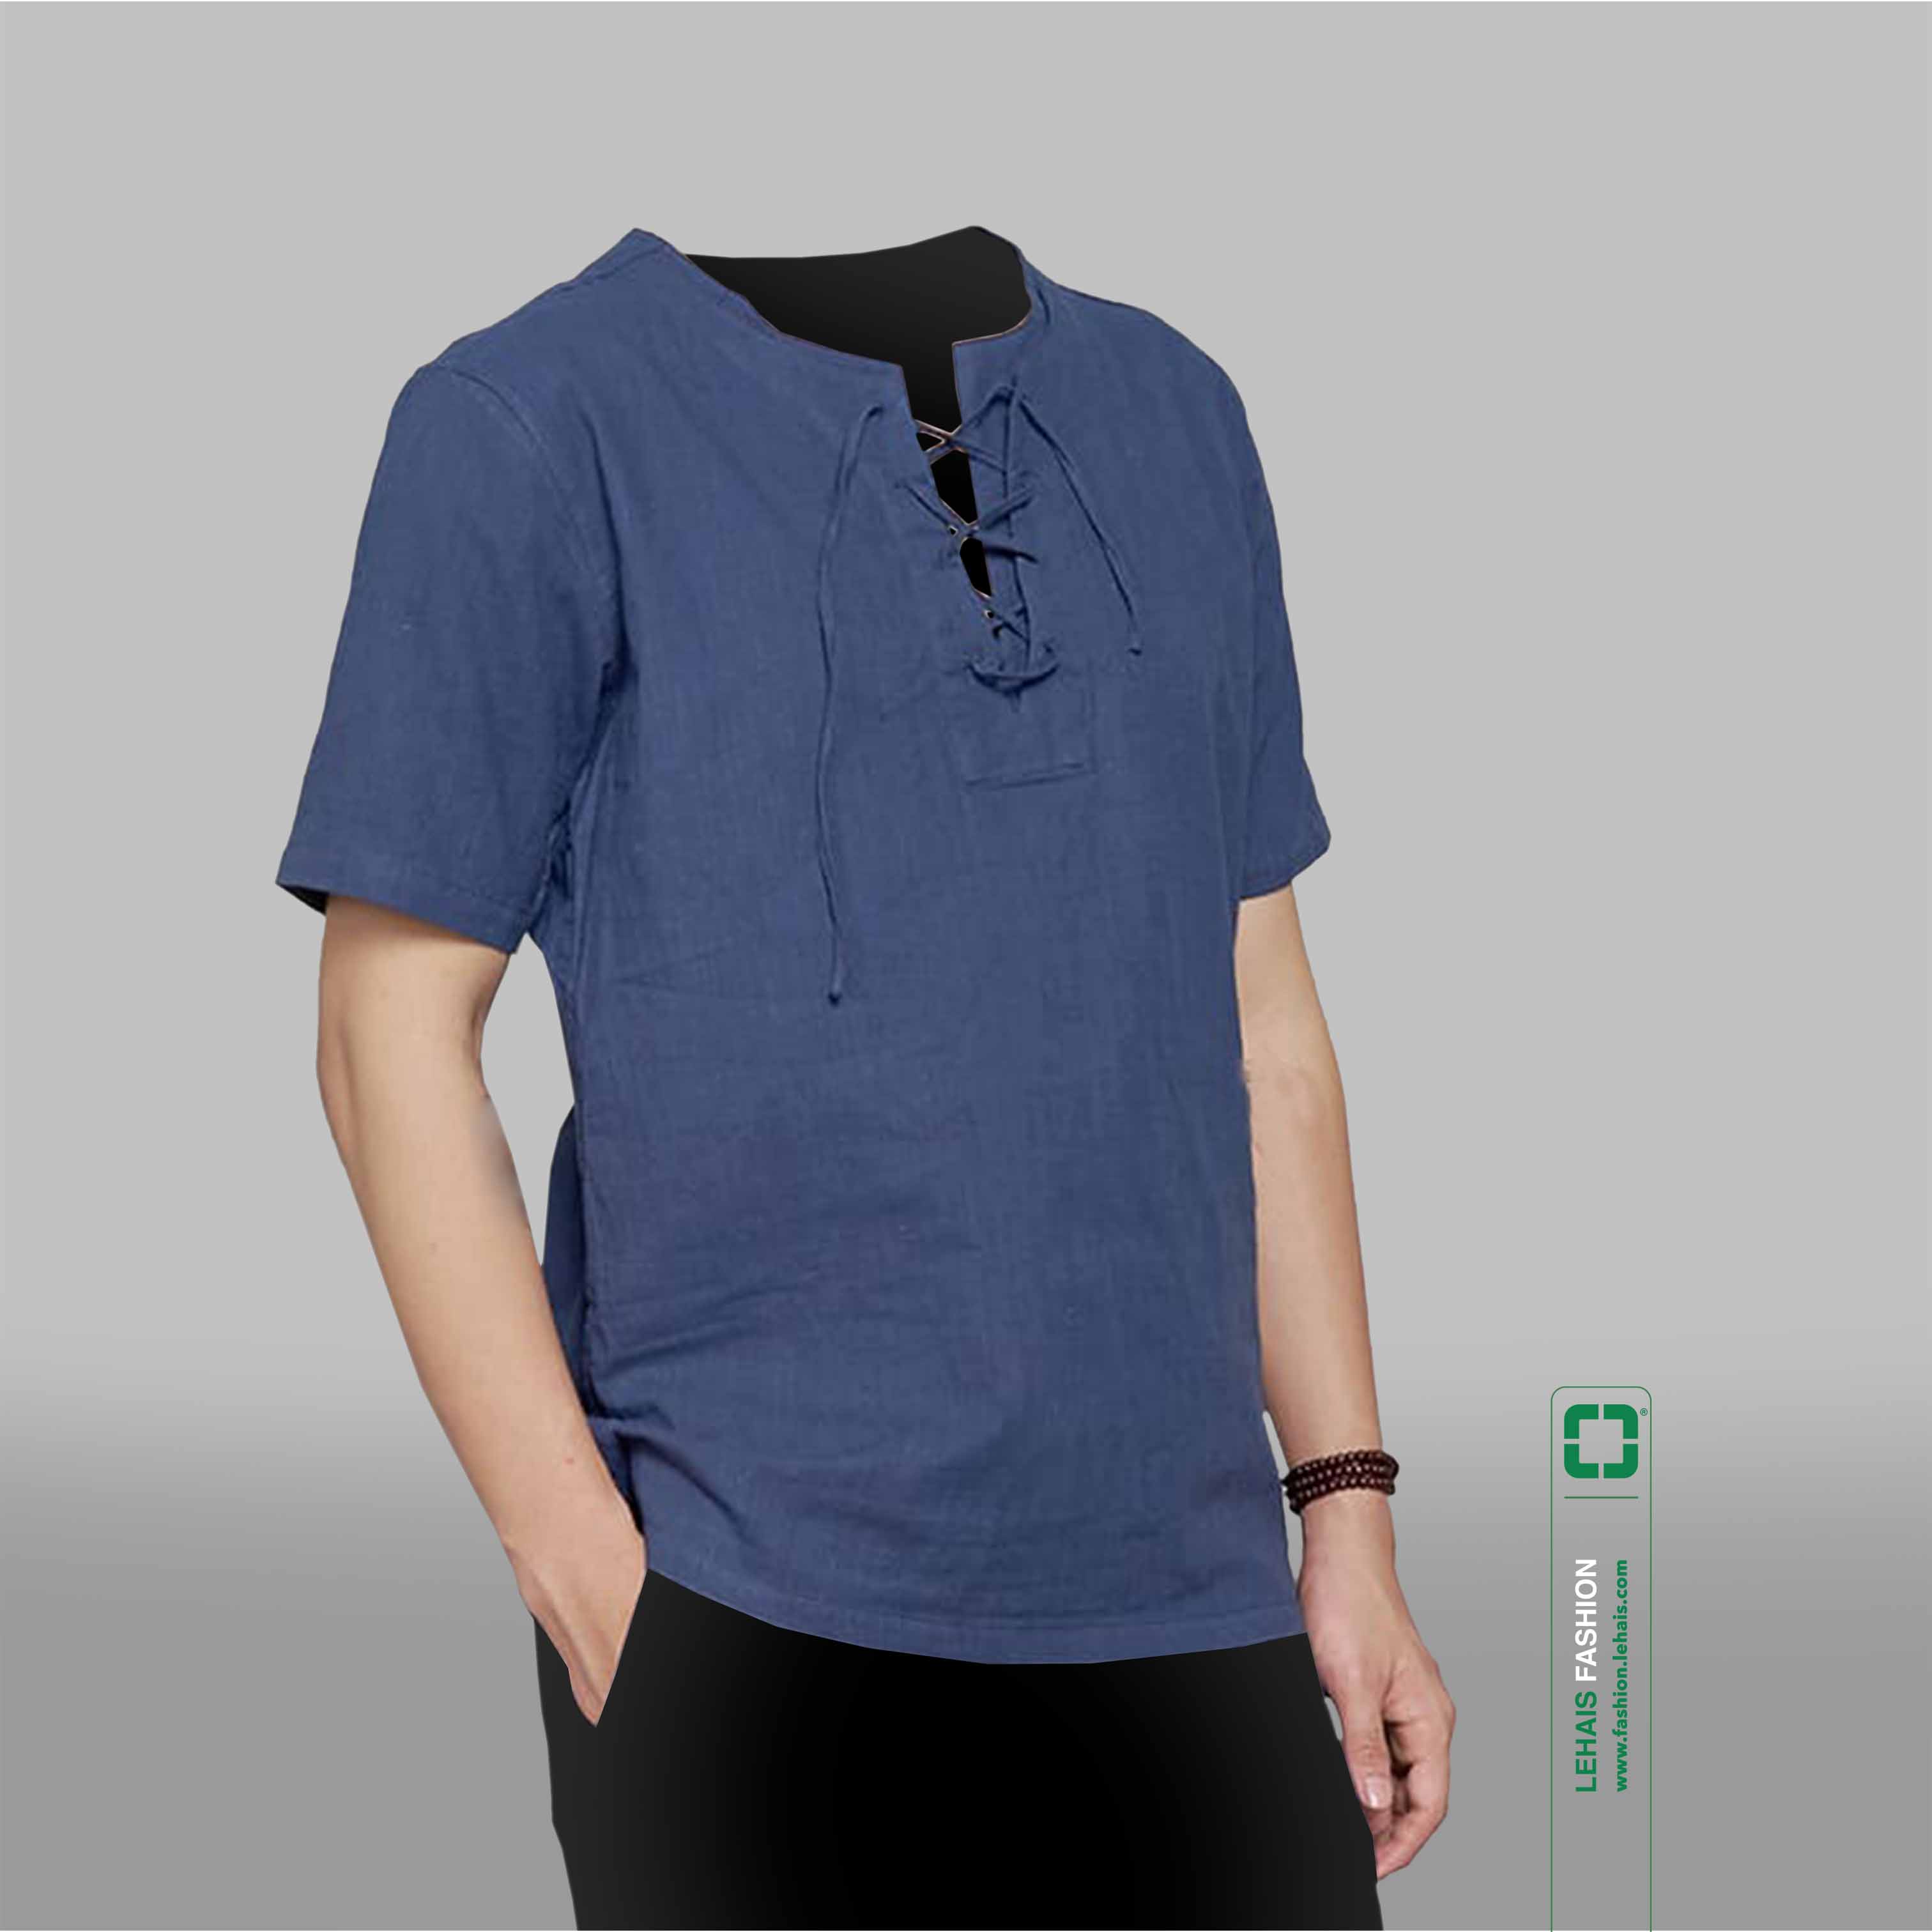 Men's short-sleeved round neck V-neck T-shirt here - A5LHFA